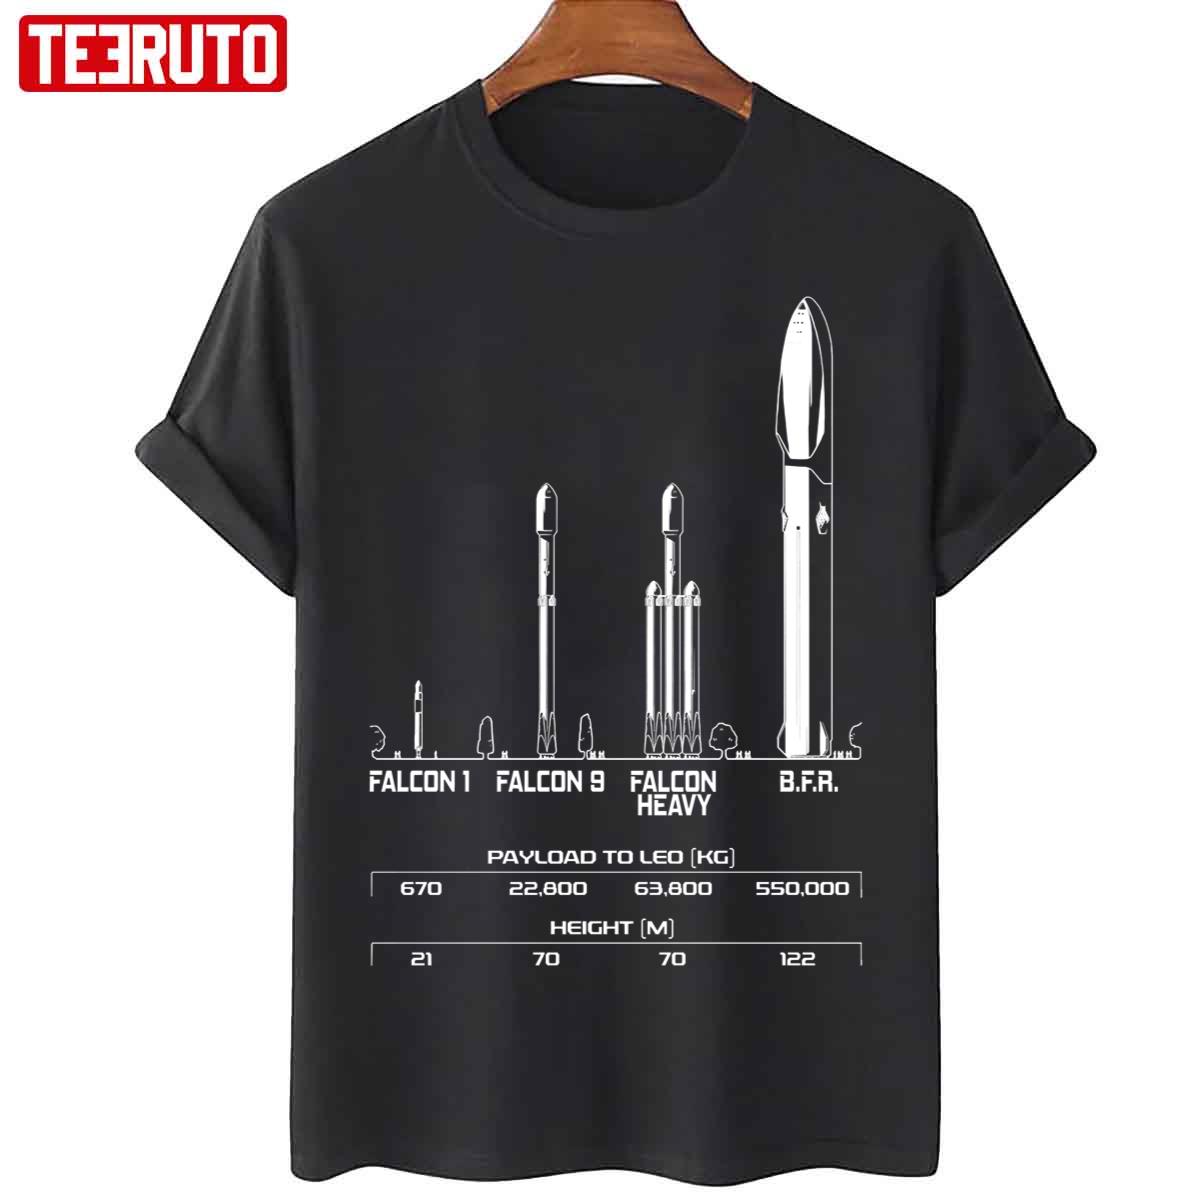 Big Fing Rocket Spacex Elon Musk Unisex T-Shirt